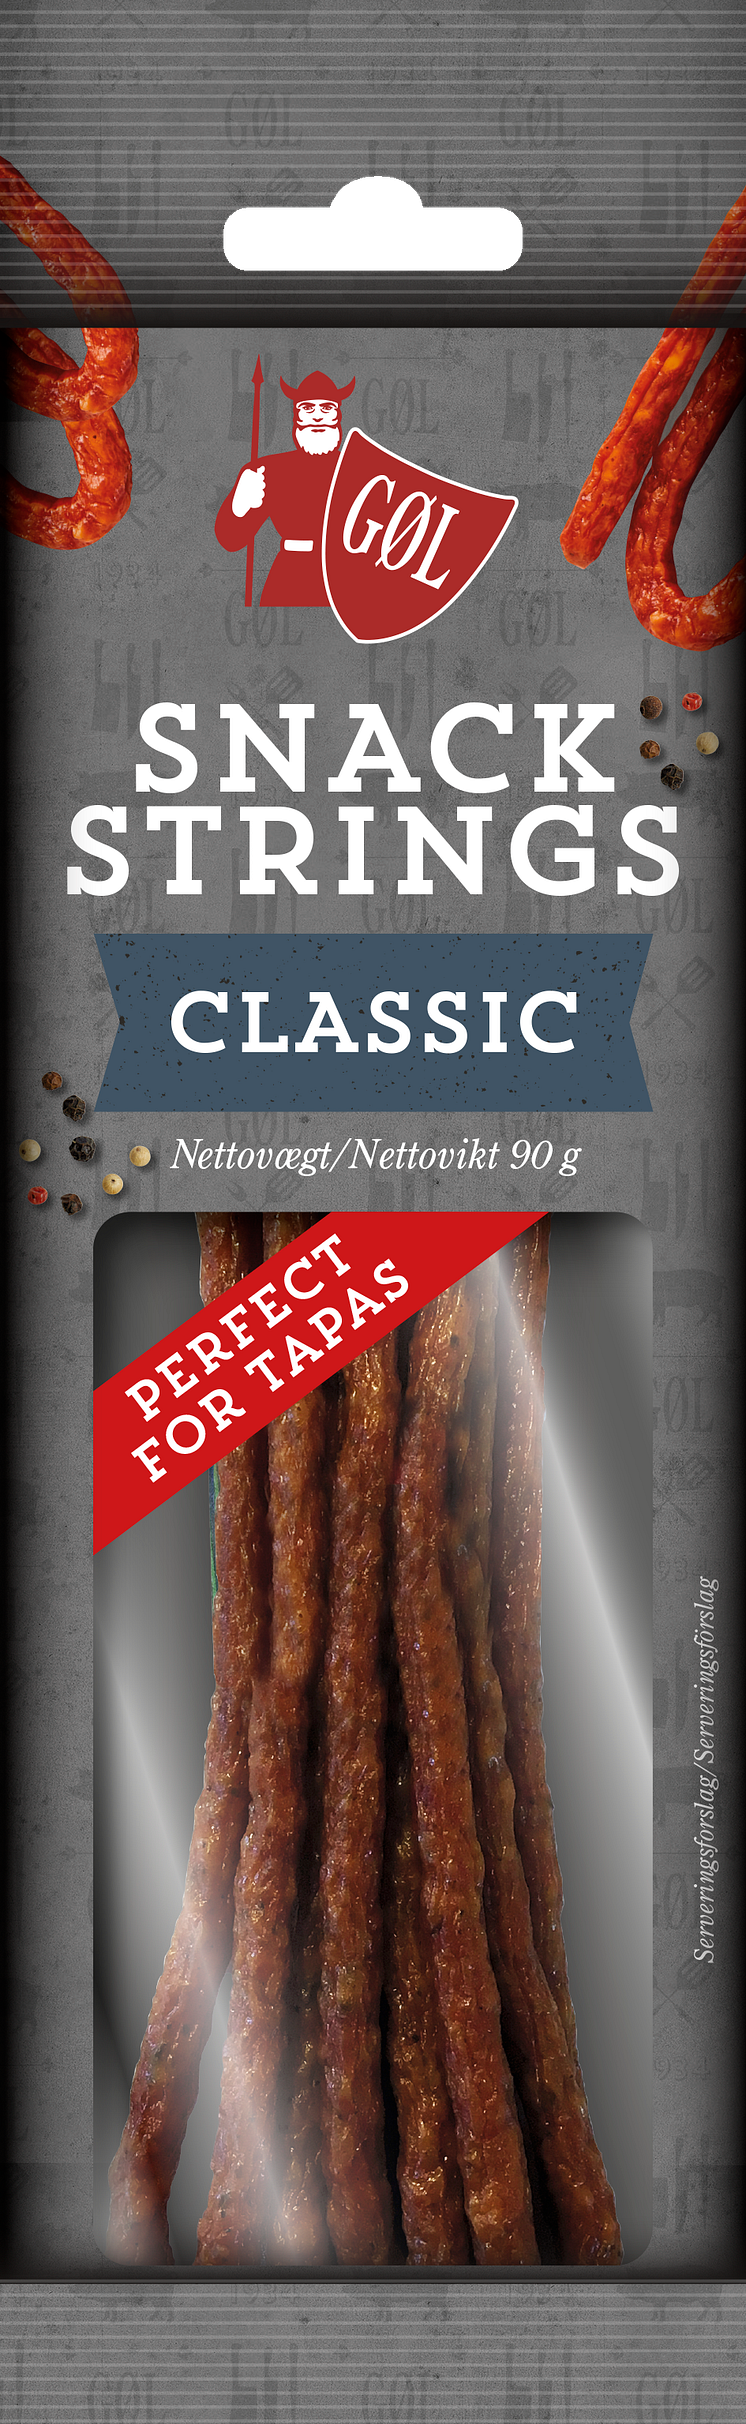 15691 Gøl Snack Strings Classic 80x260 DK SE.png